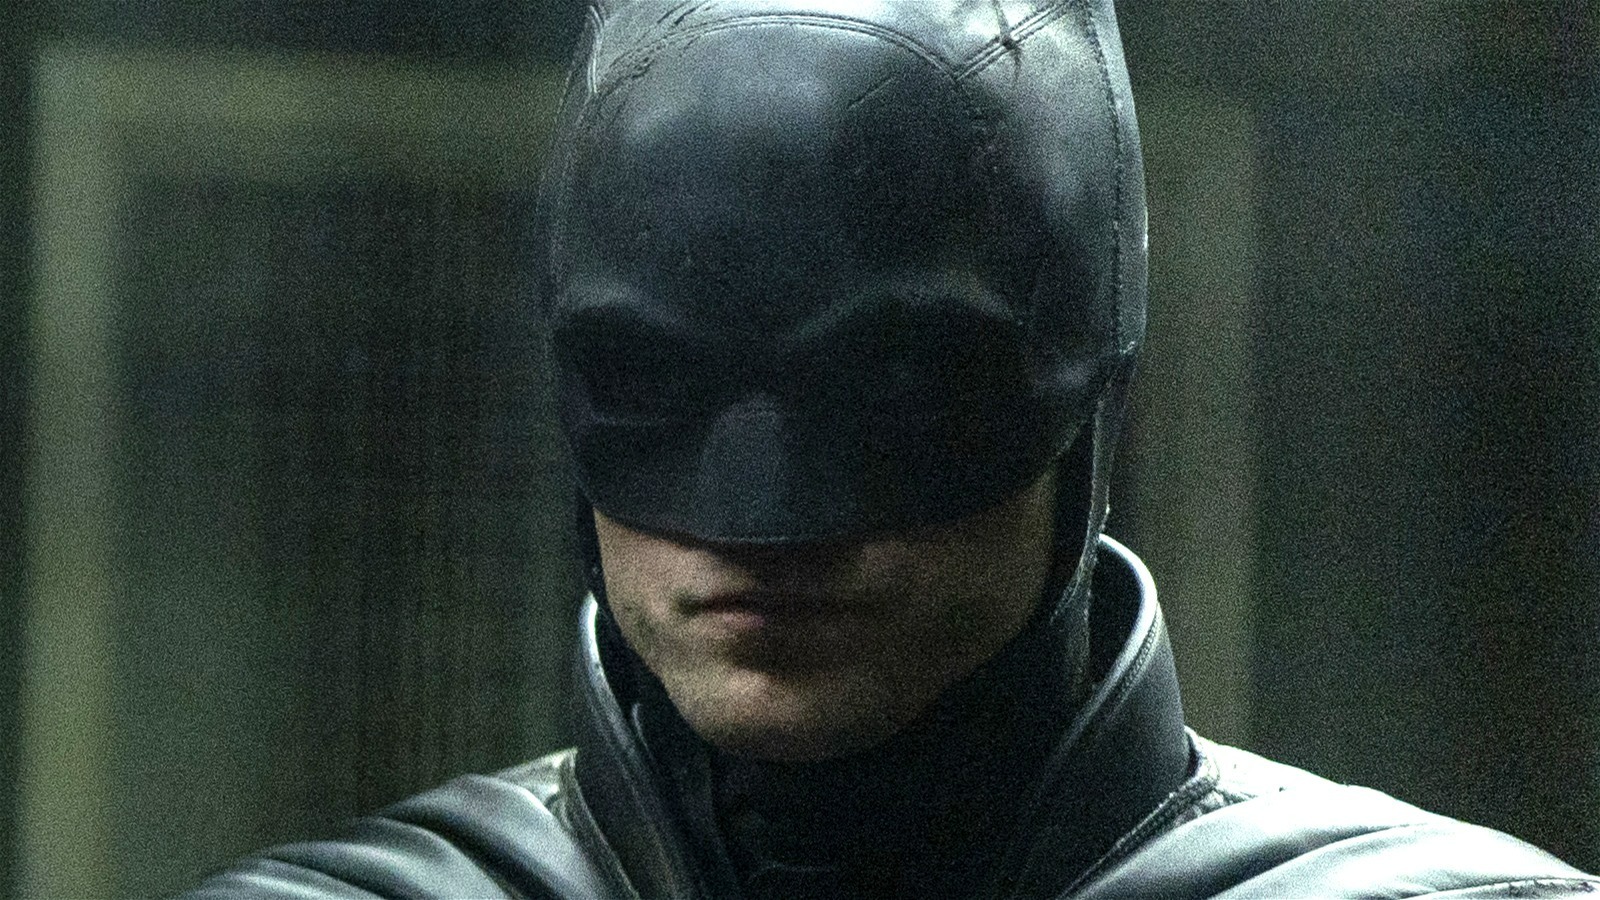 Why Batman's Costume Makes No Sense According To Science